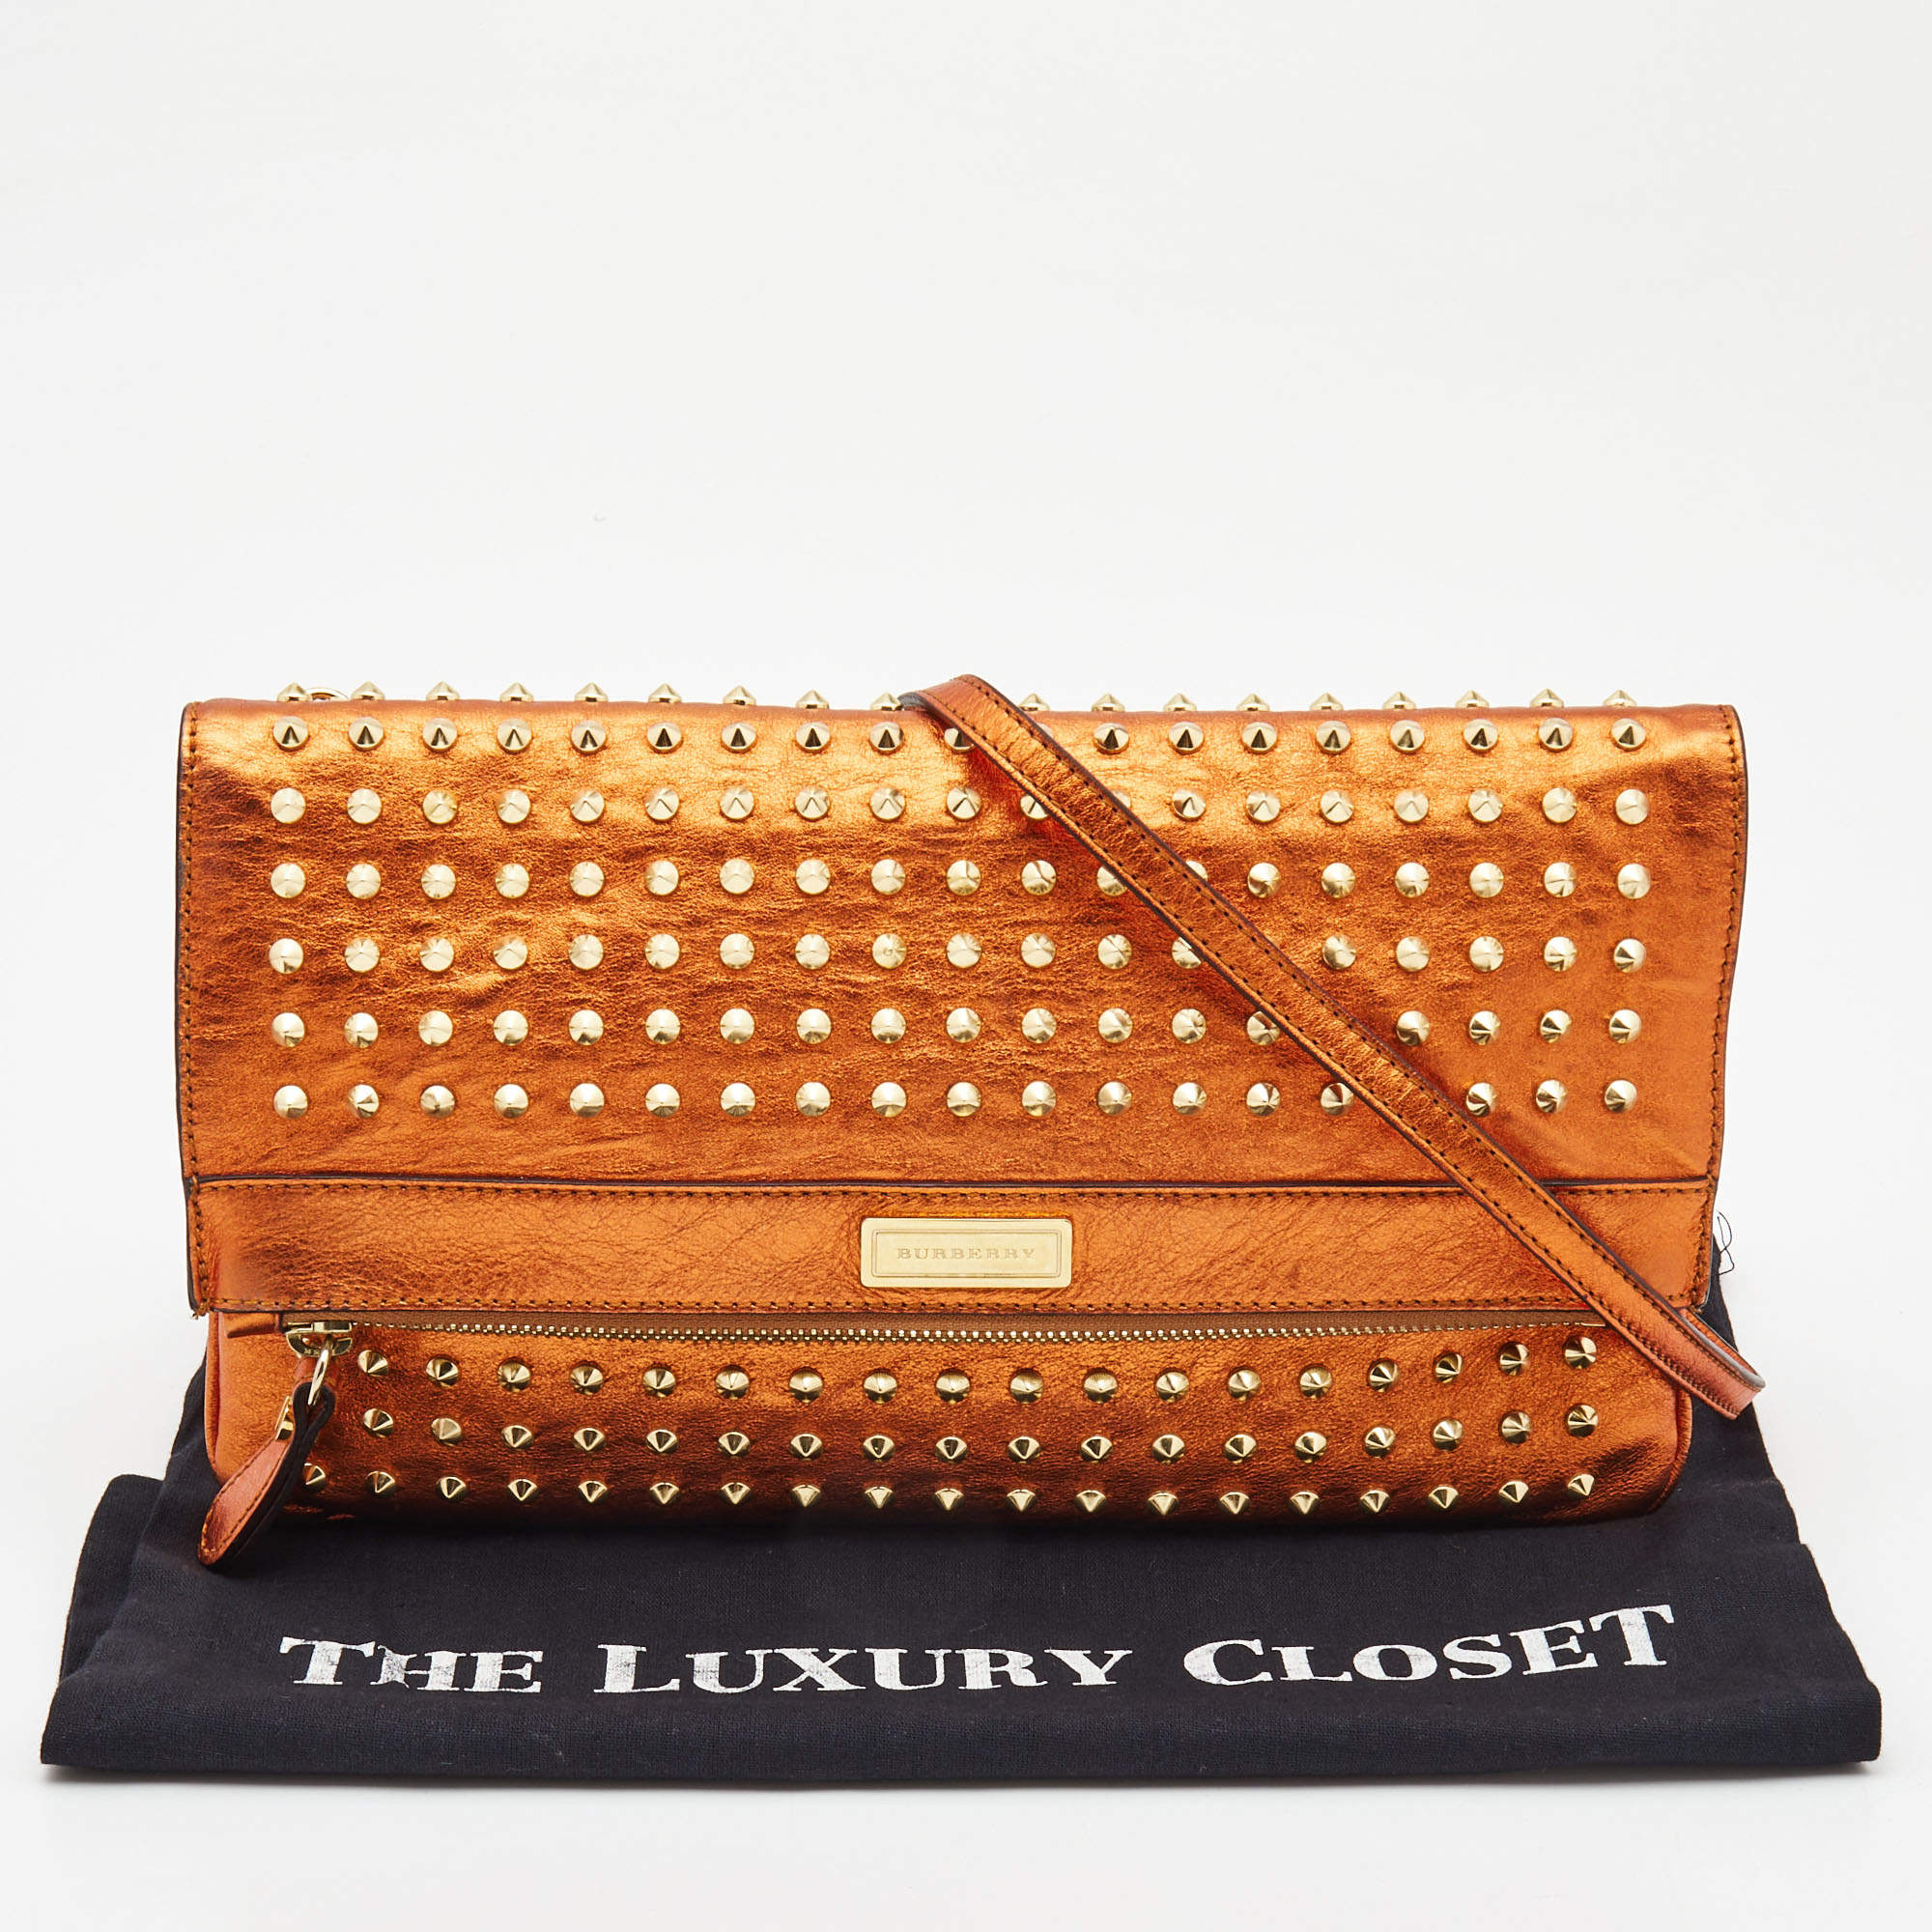 Legit check for beautiful purse, please? : r/Burberry